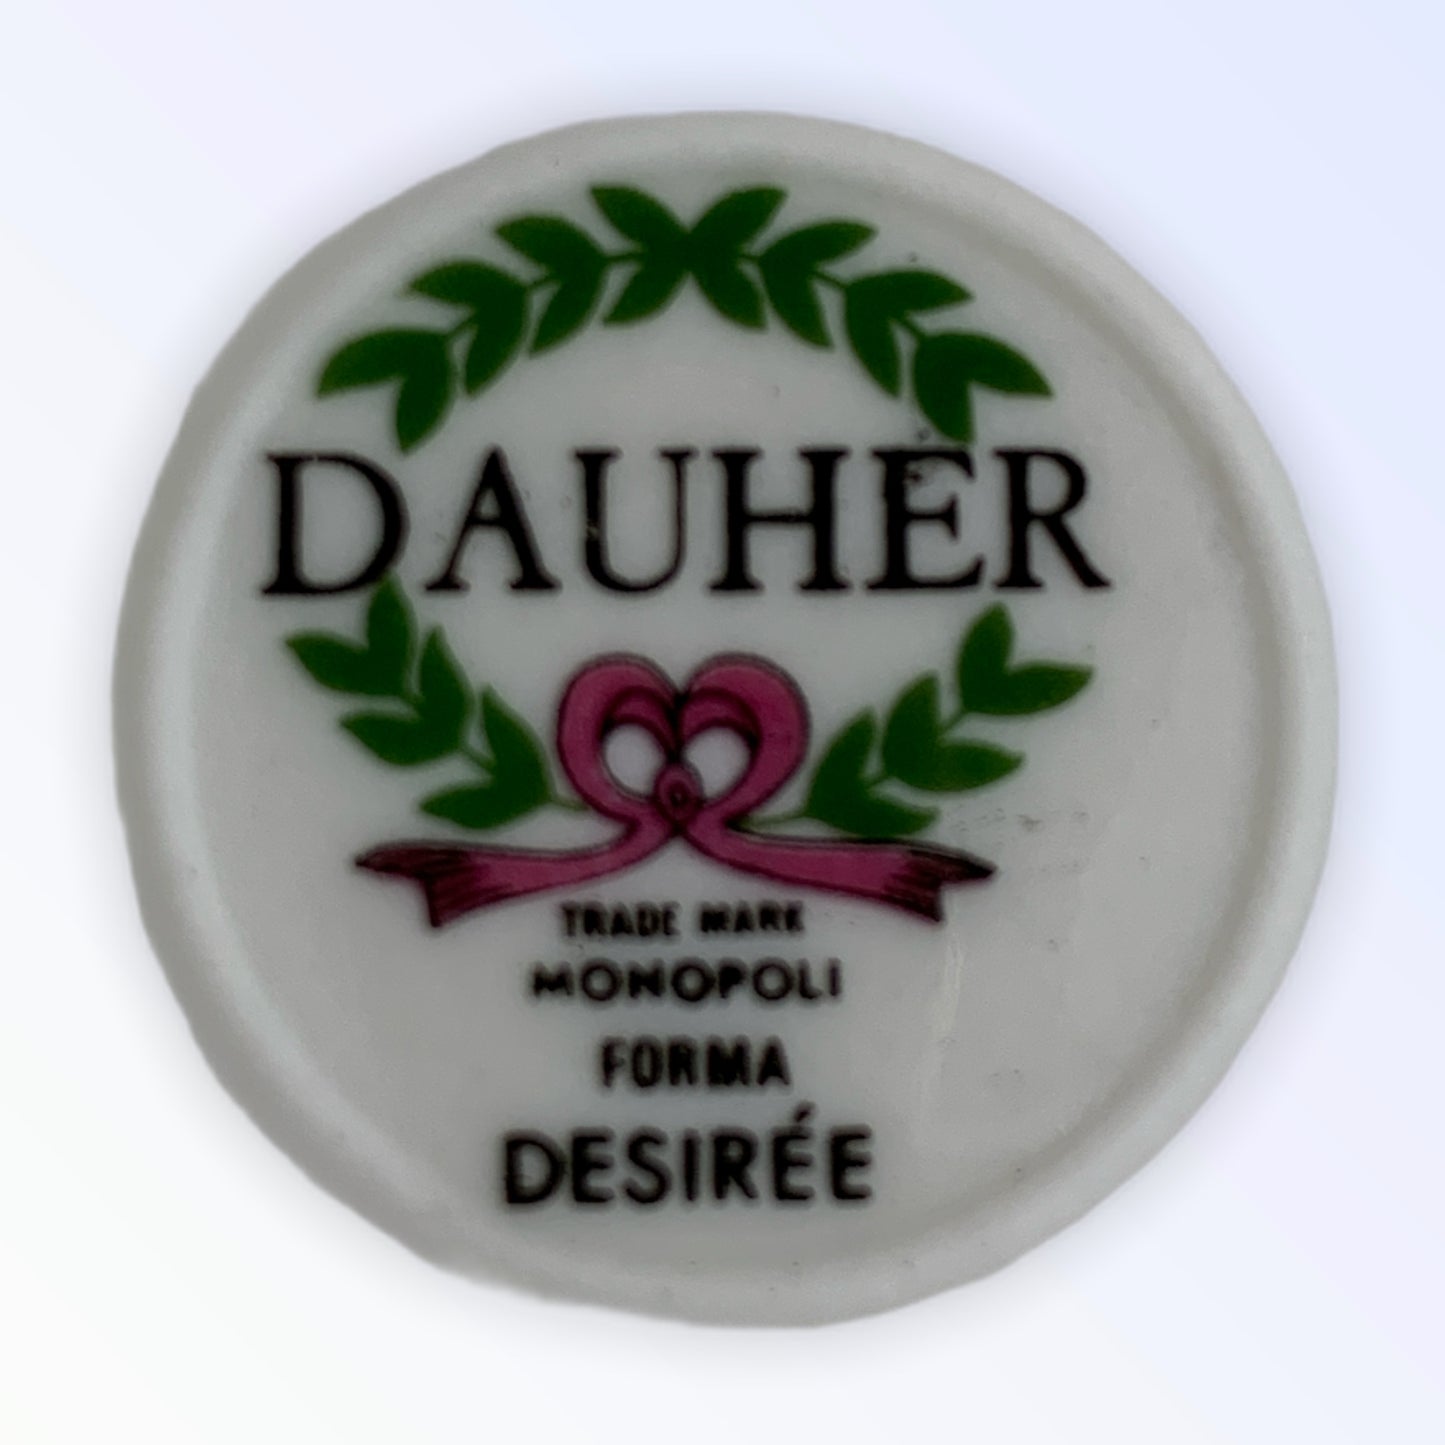 Dauher serving plate Desiree Monopoli shape